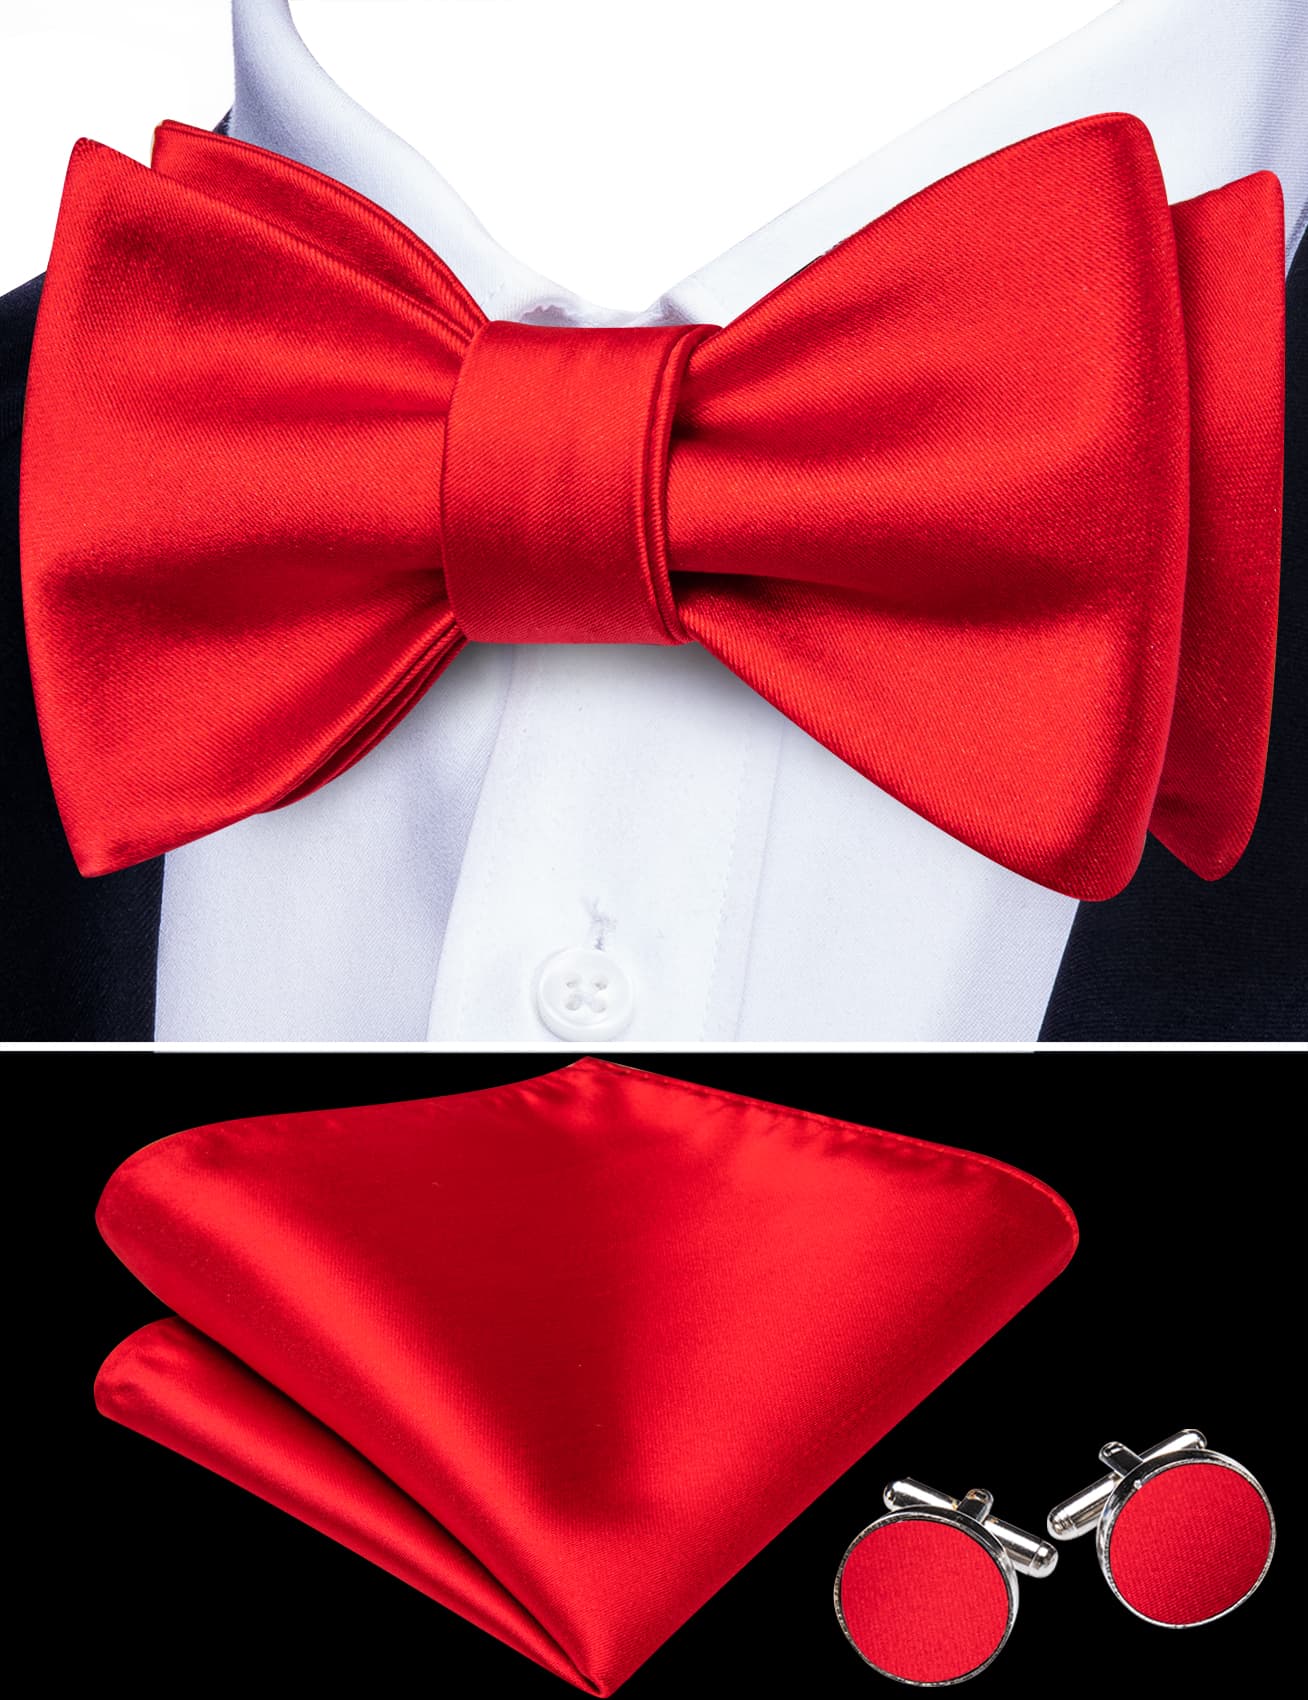 black suit red tie splf bow tie with black suit 